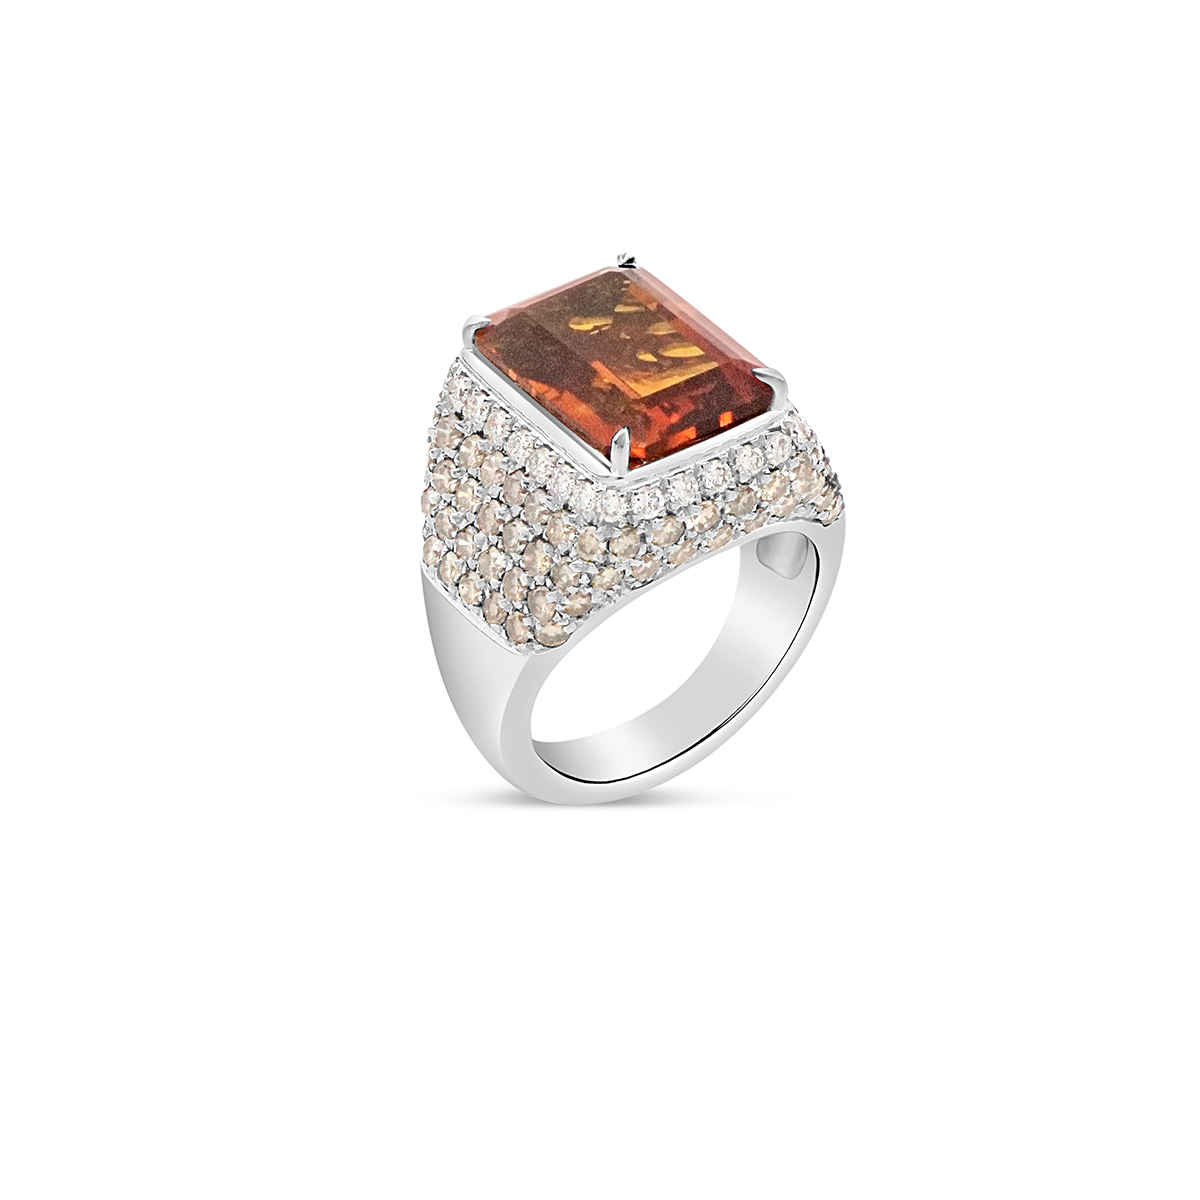 Elegant ring with diamonds octagonal citrine quartz in 18kt white gold